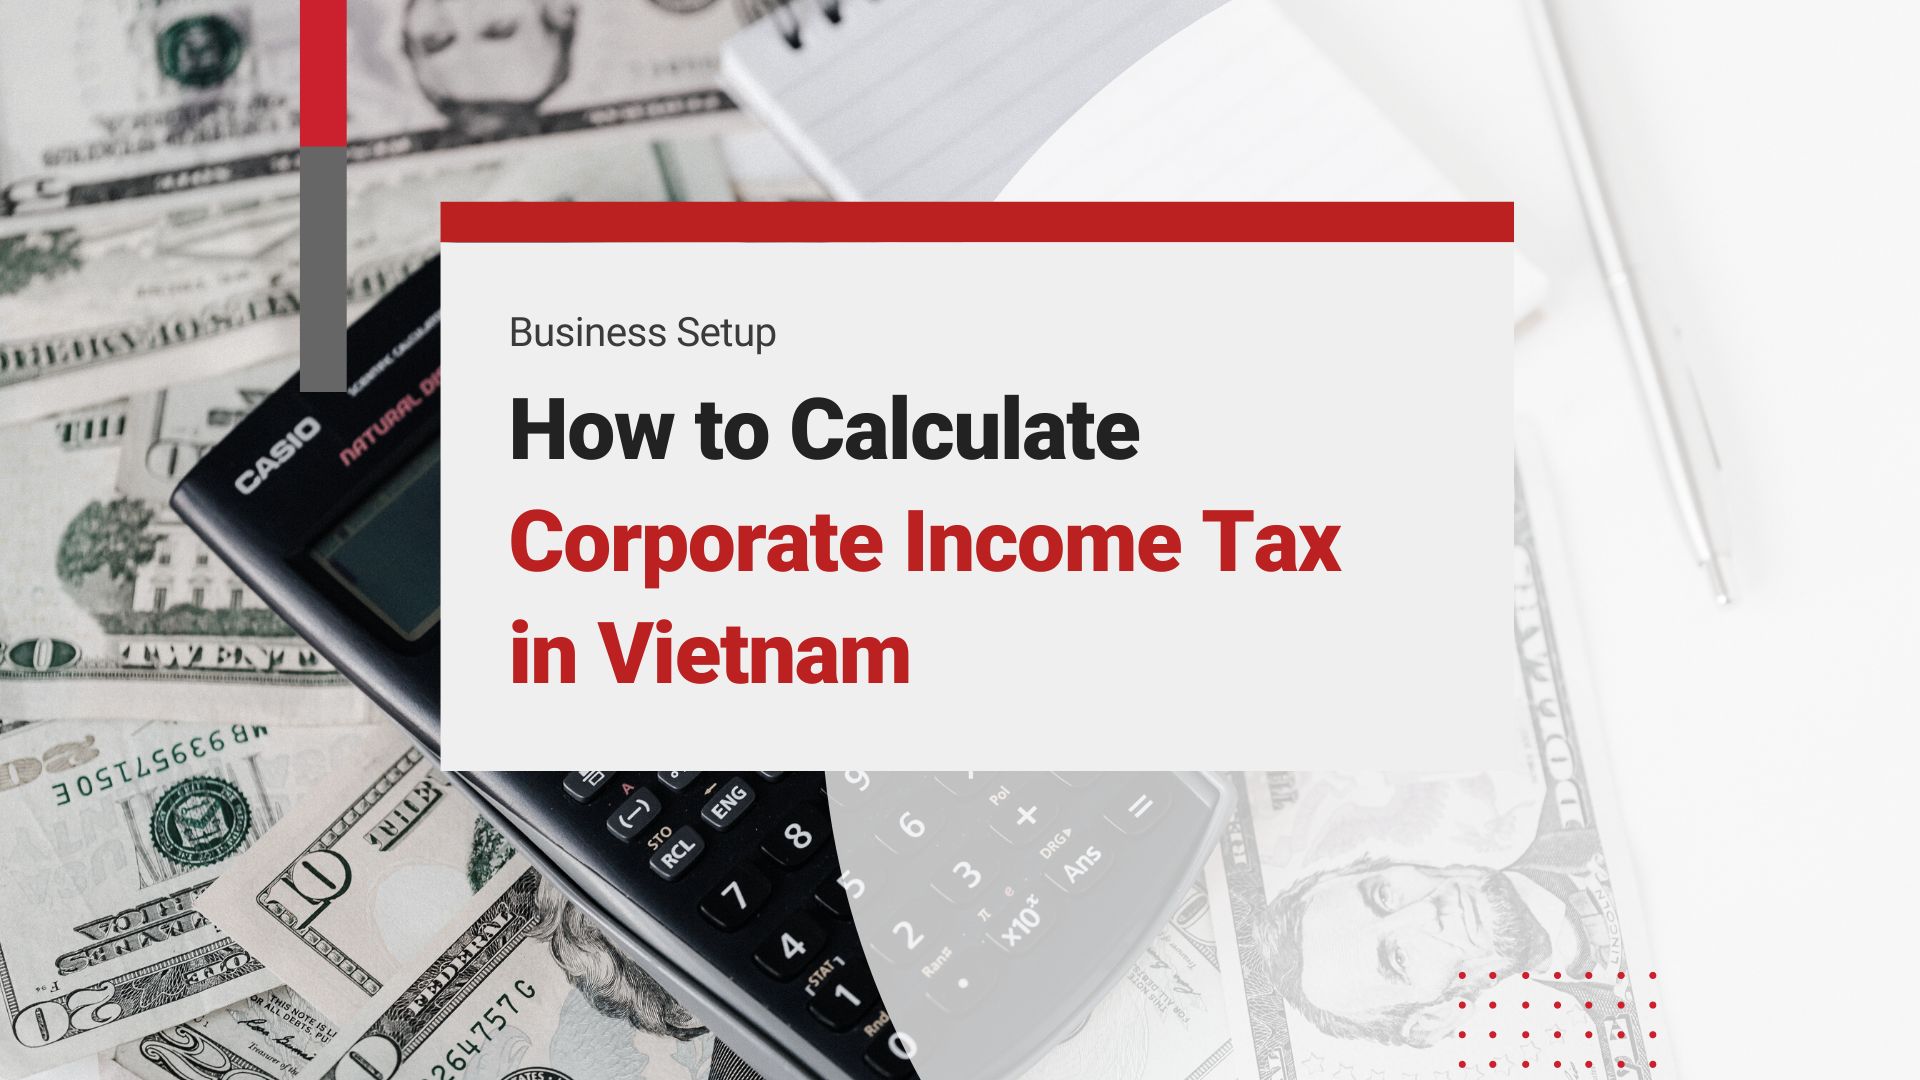 Corporate Income Tax in Vietnam